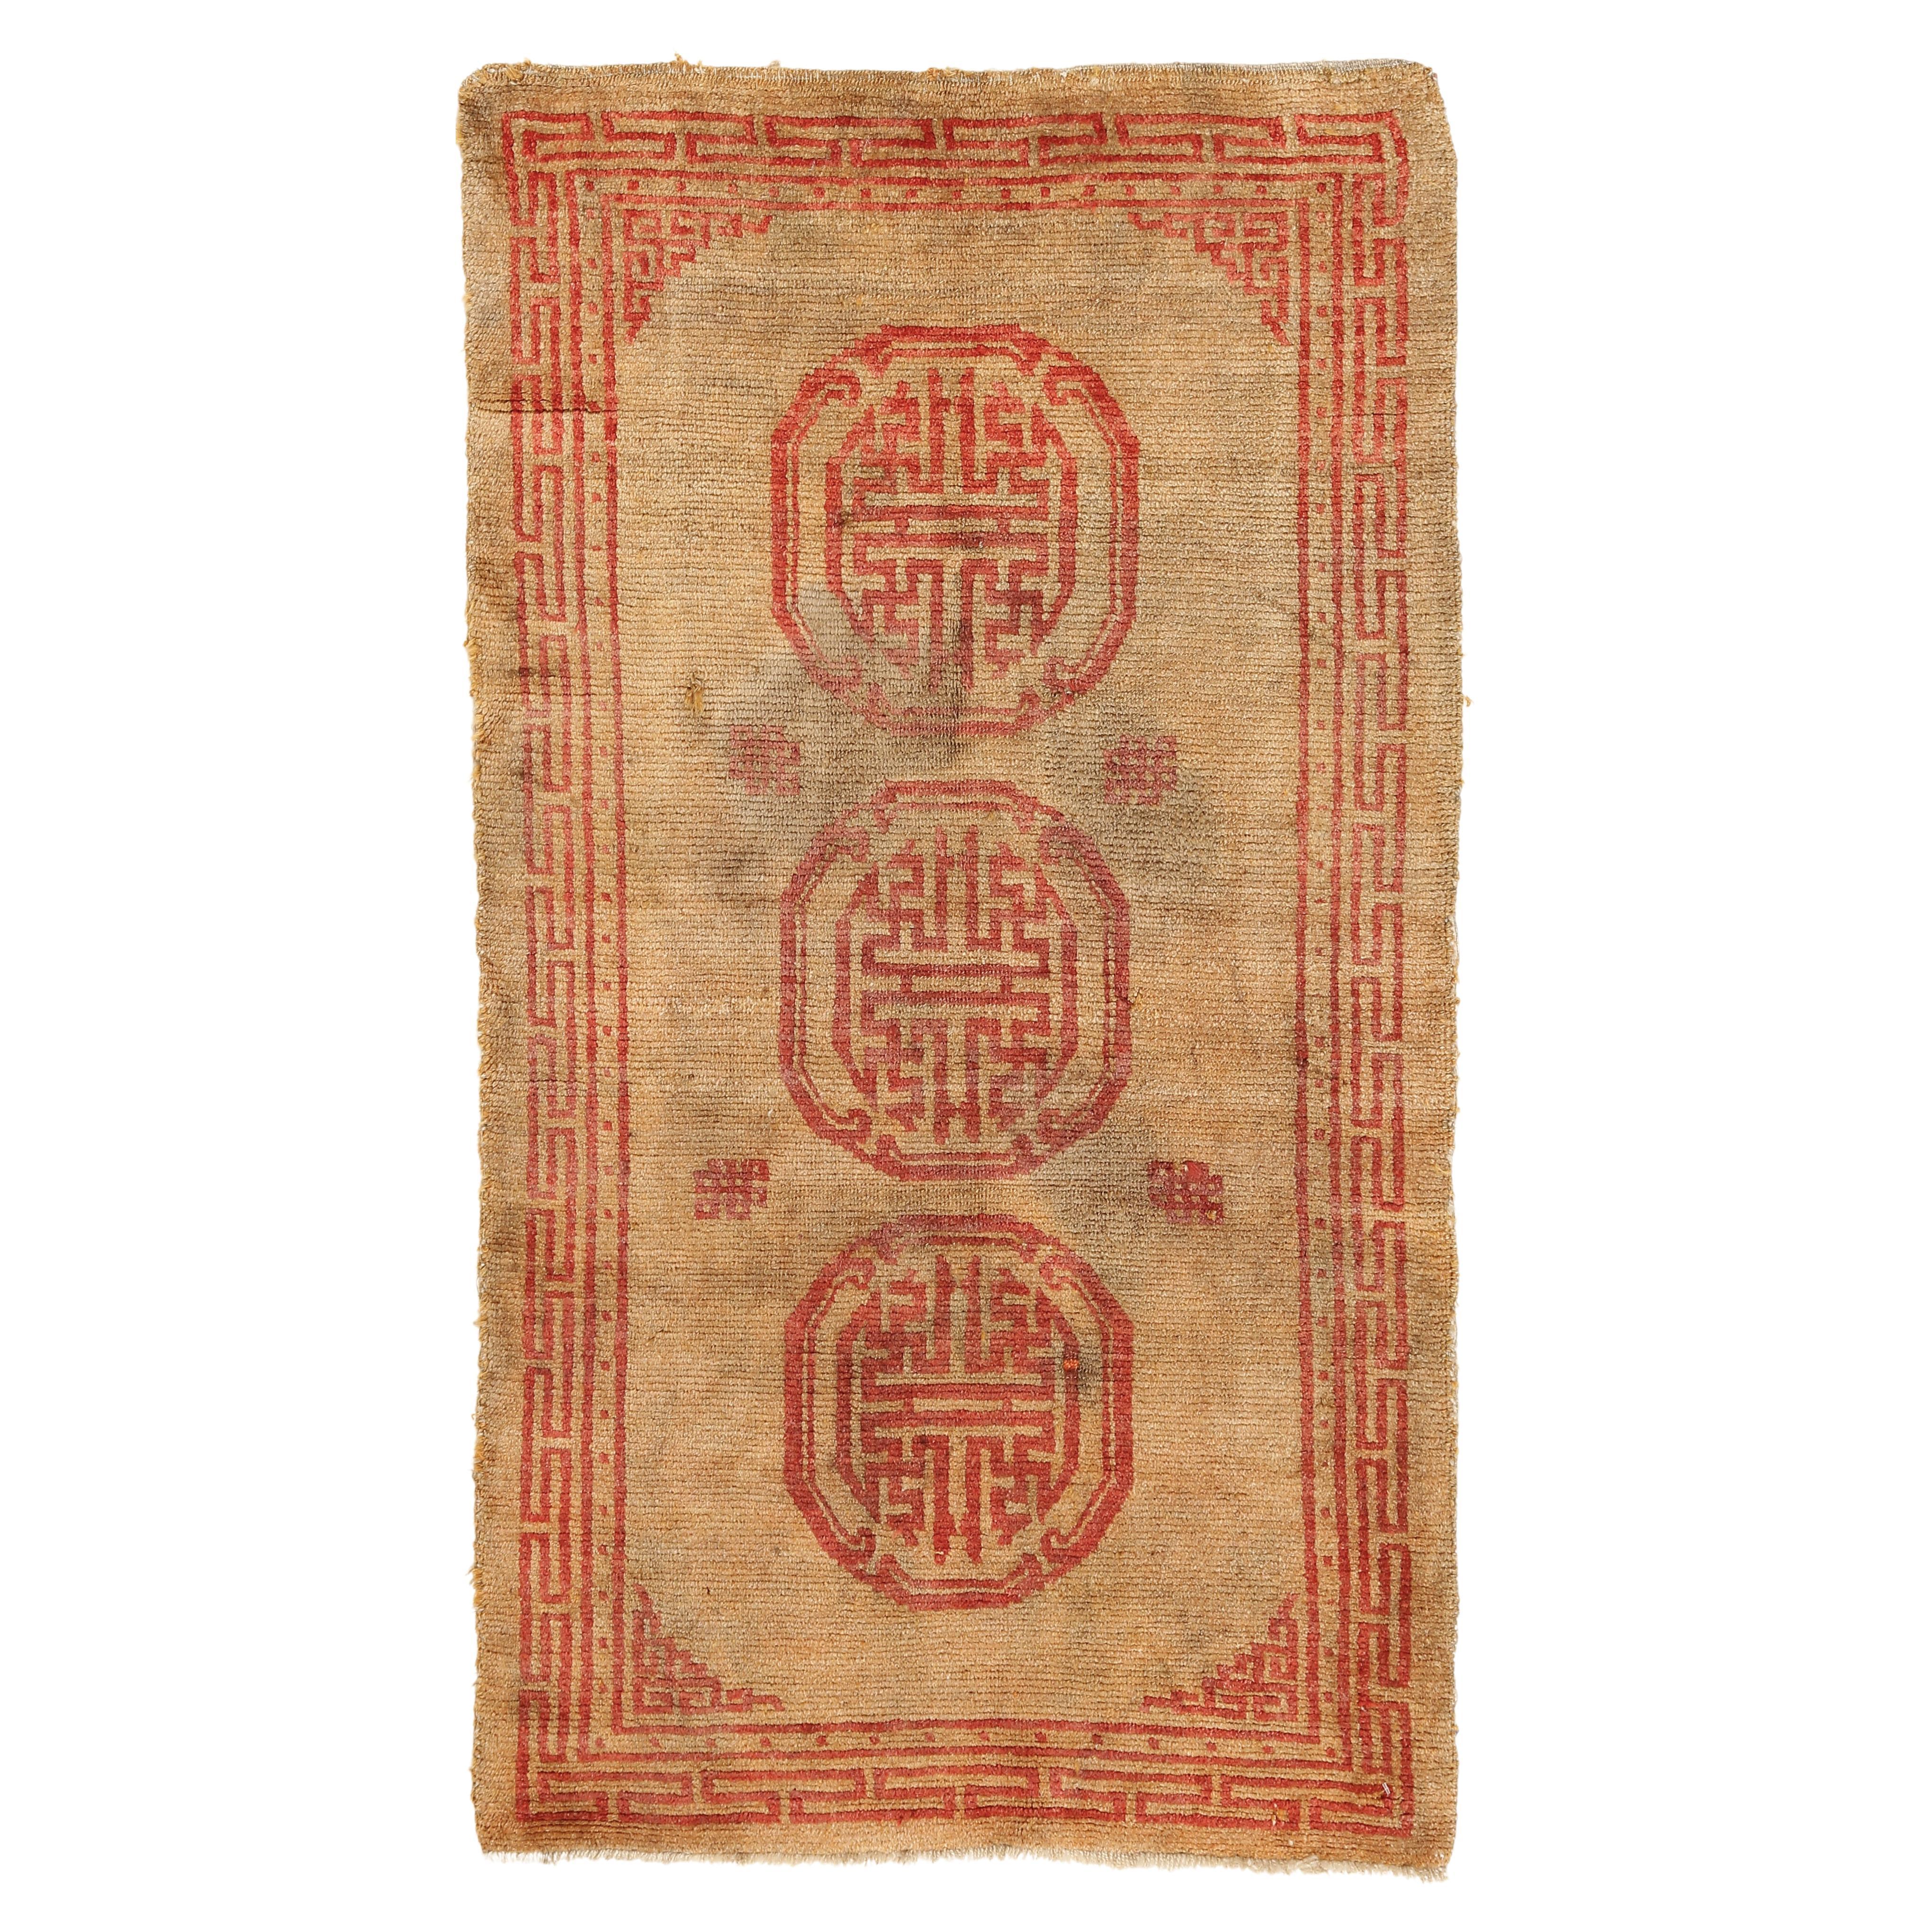 Antique Tibetan Meditation Rug with Three Mandalas For Sale